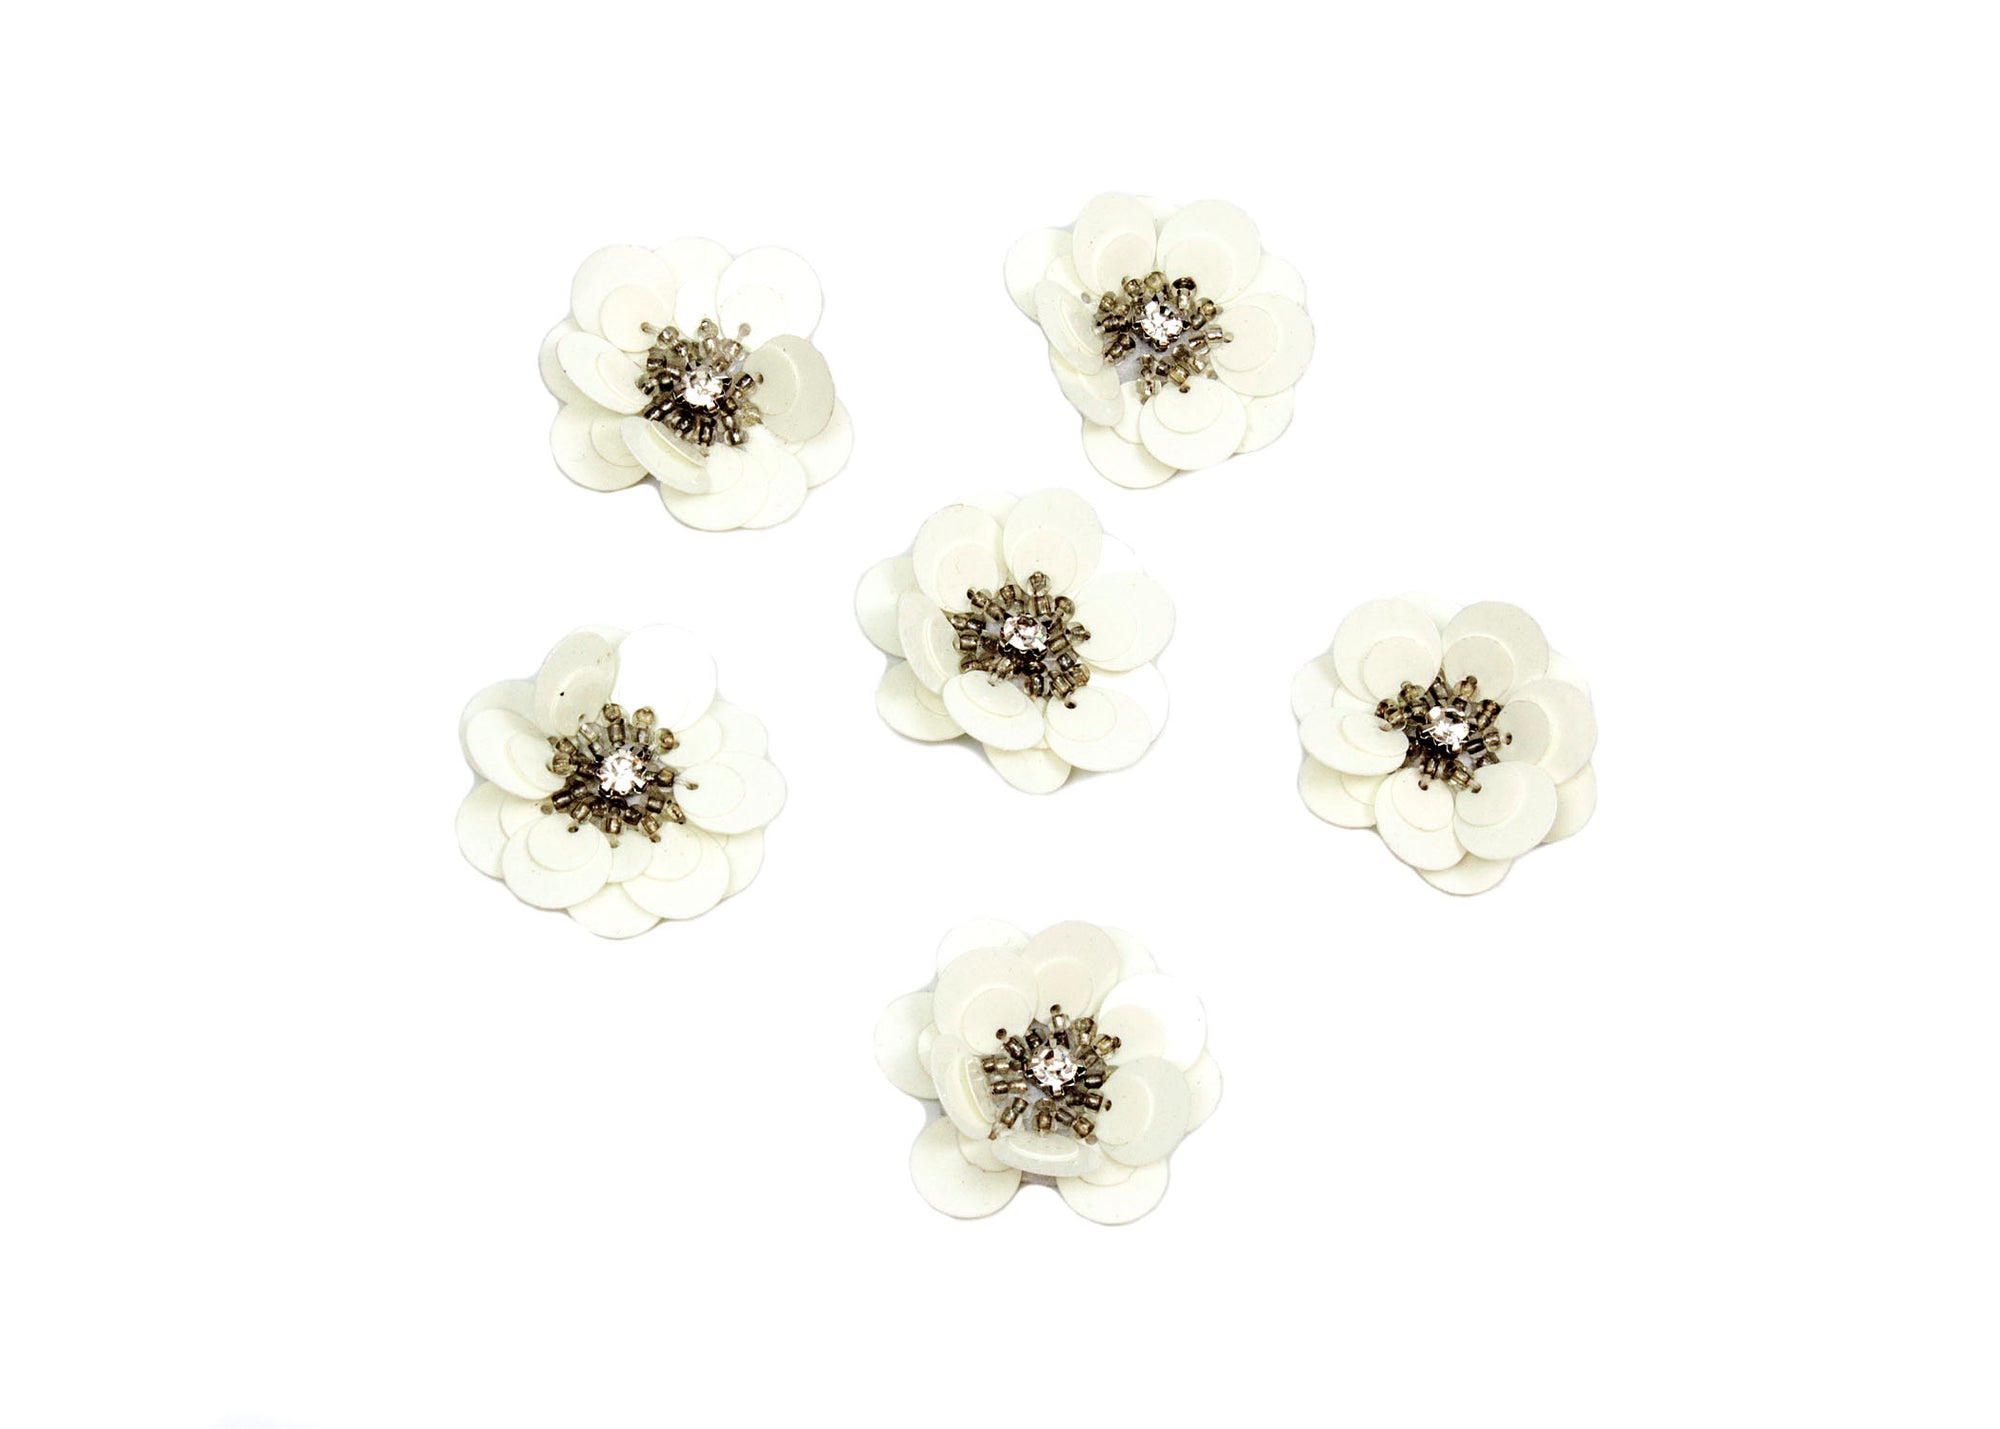 Sequin Flower 3D Applique Crystal Center - 6 Pieces - 1 1/4" Diameter - Humboldt Haberdashery